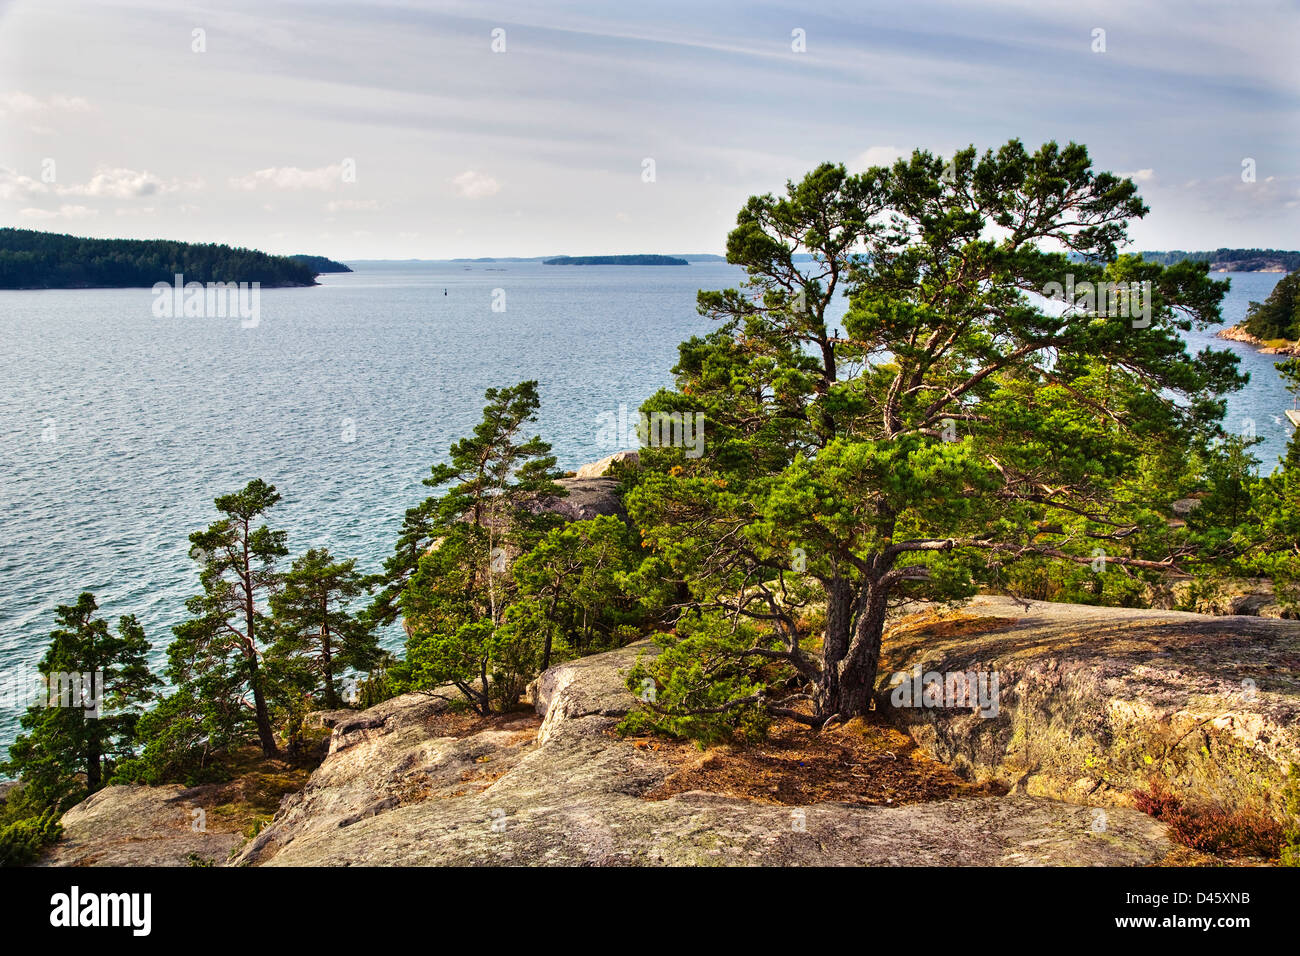 Finlandia, el archipiélago de Turku, vista del archipiélago de Airisto Holiday Resort Foto de stock